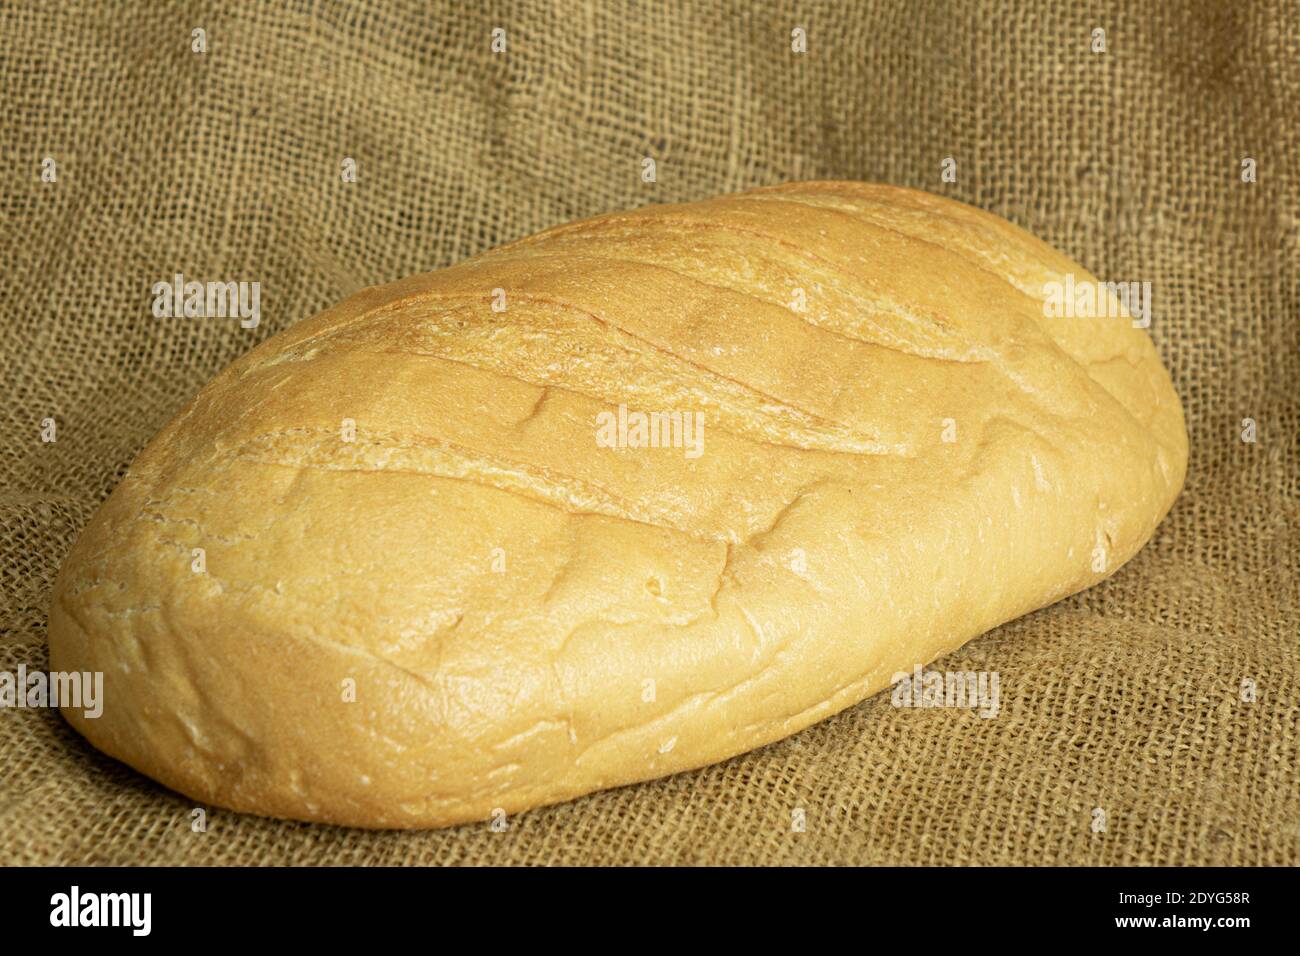 Fresh handmade bread on sackcloth background Stock Photo